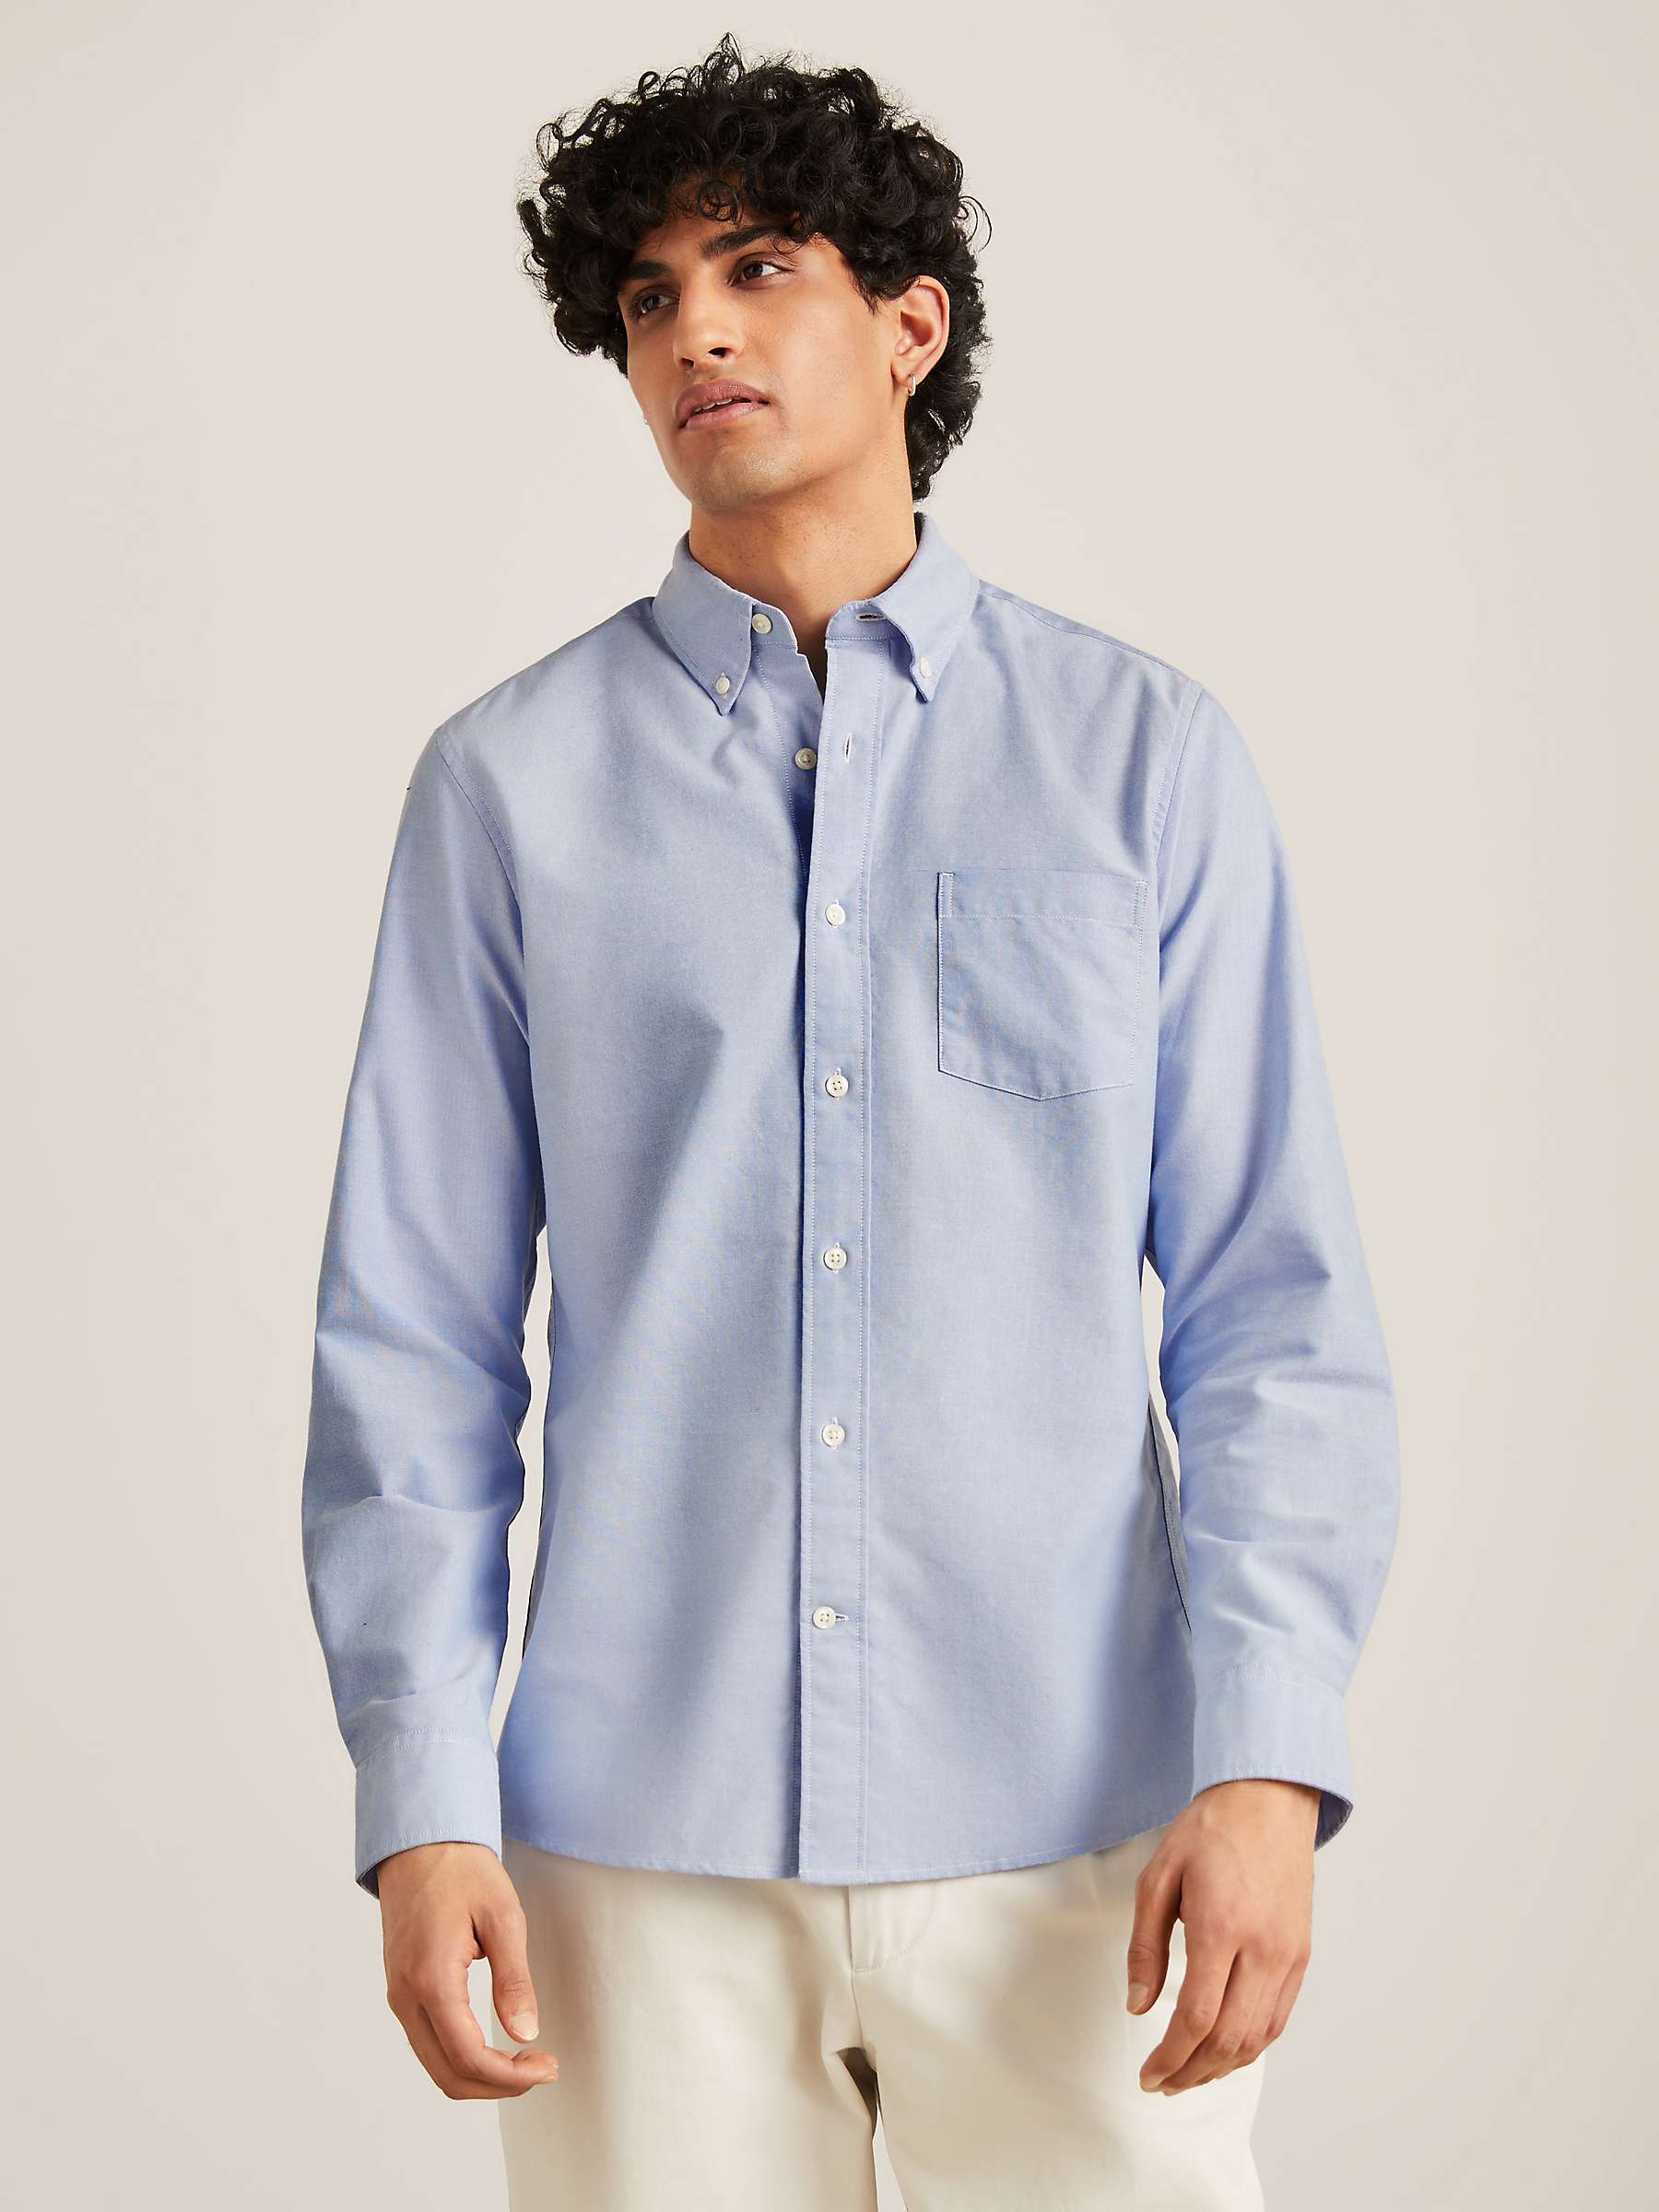 Buy John Lewis Regular Fit Cotton Oxford Button Down Shirt Online at johnlewis.com